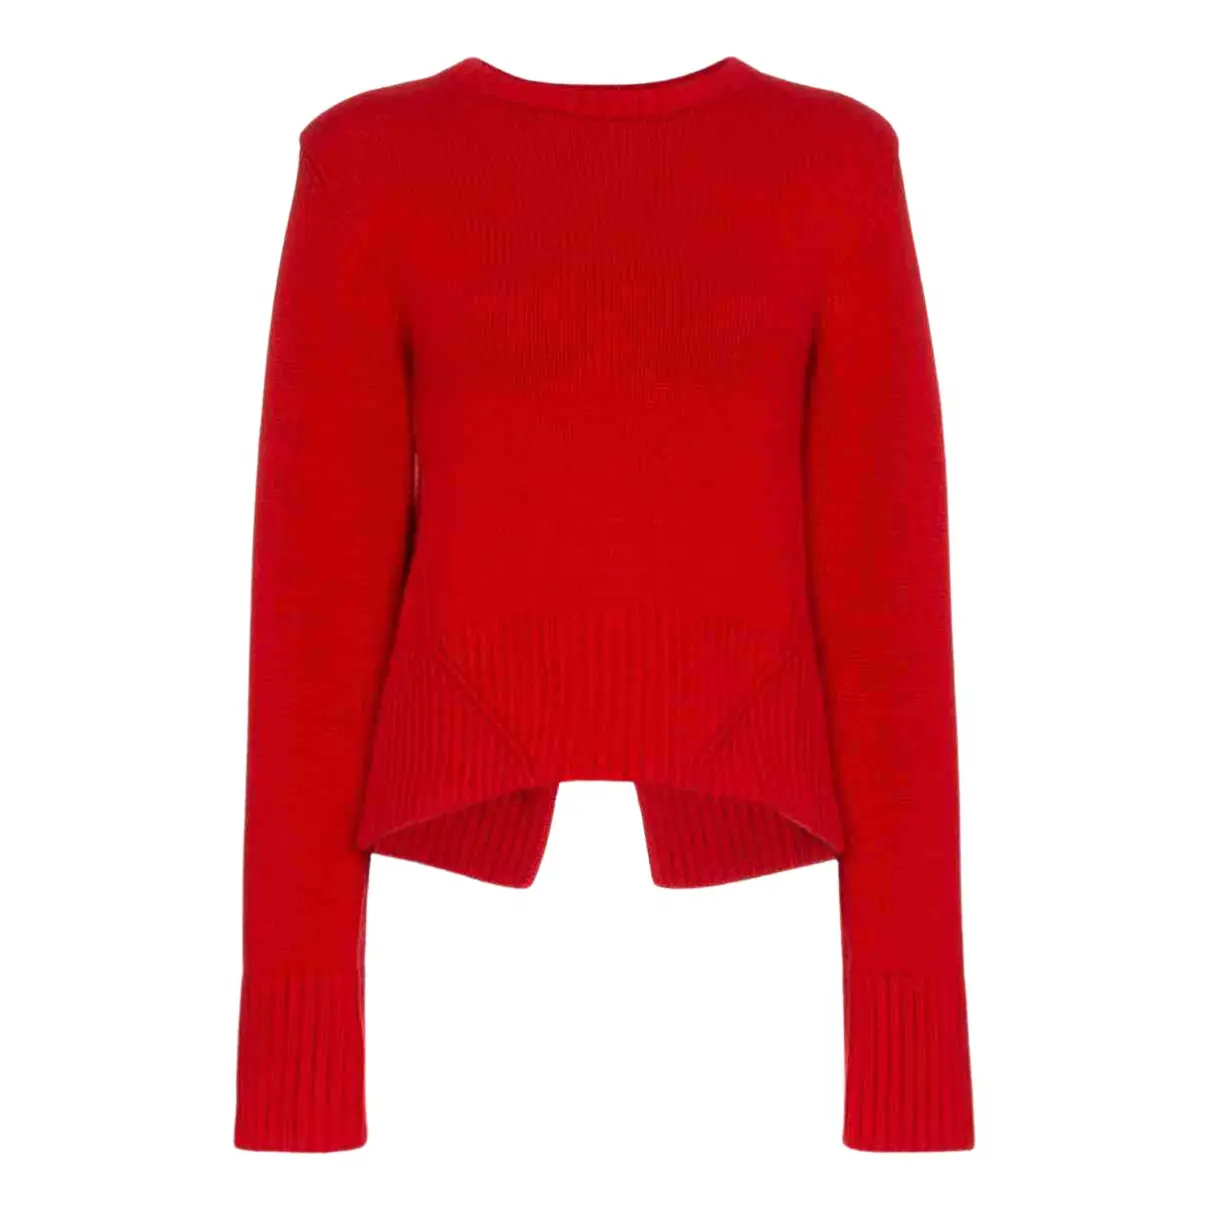 Buy Khaite Cashmere jumper online